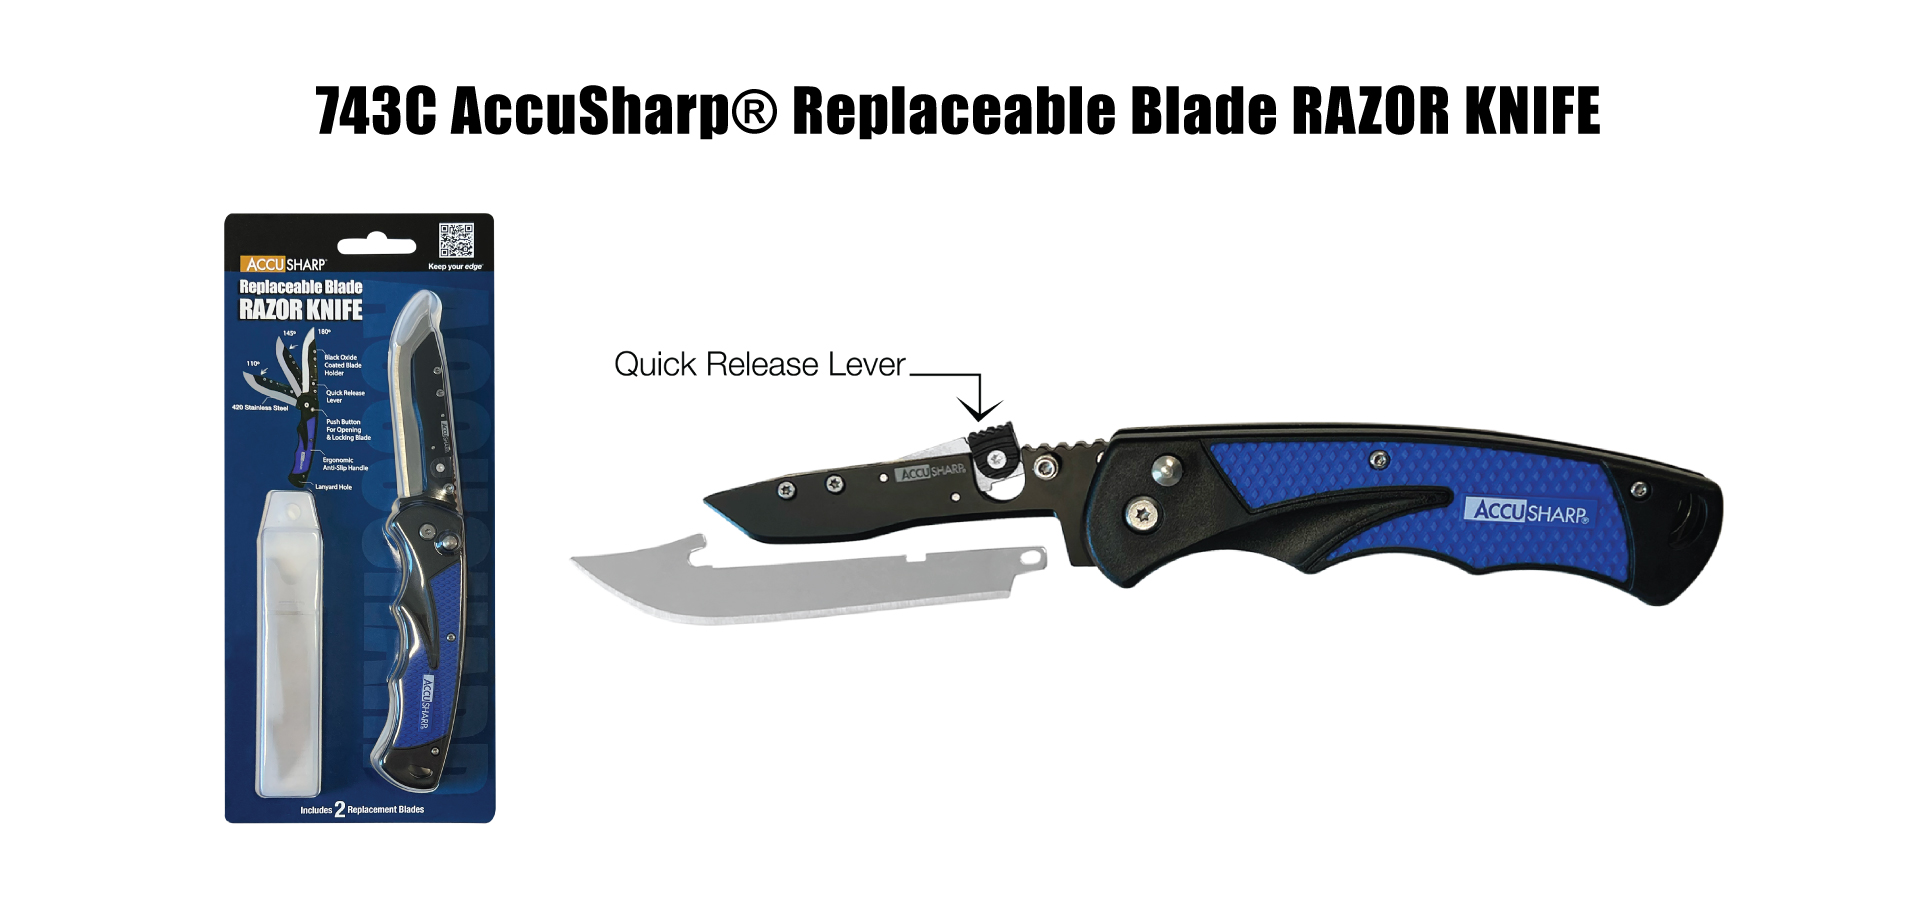 AccuSharp Knife and Tool Sharpener - Ginchy Gadget